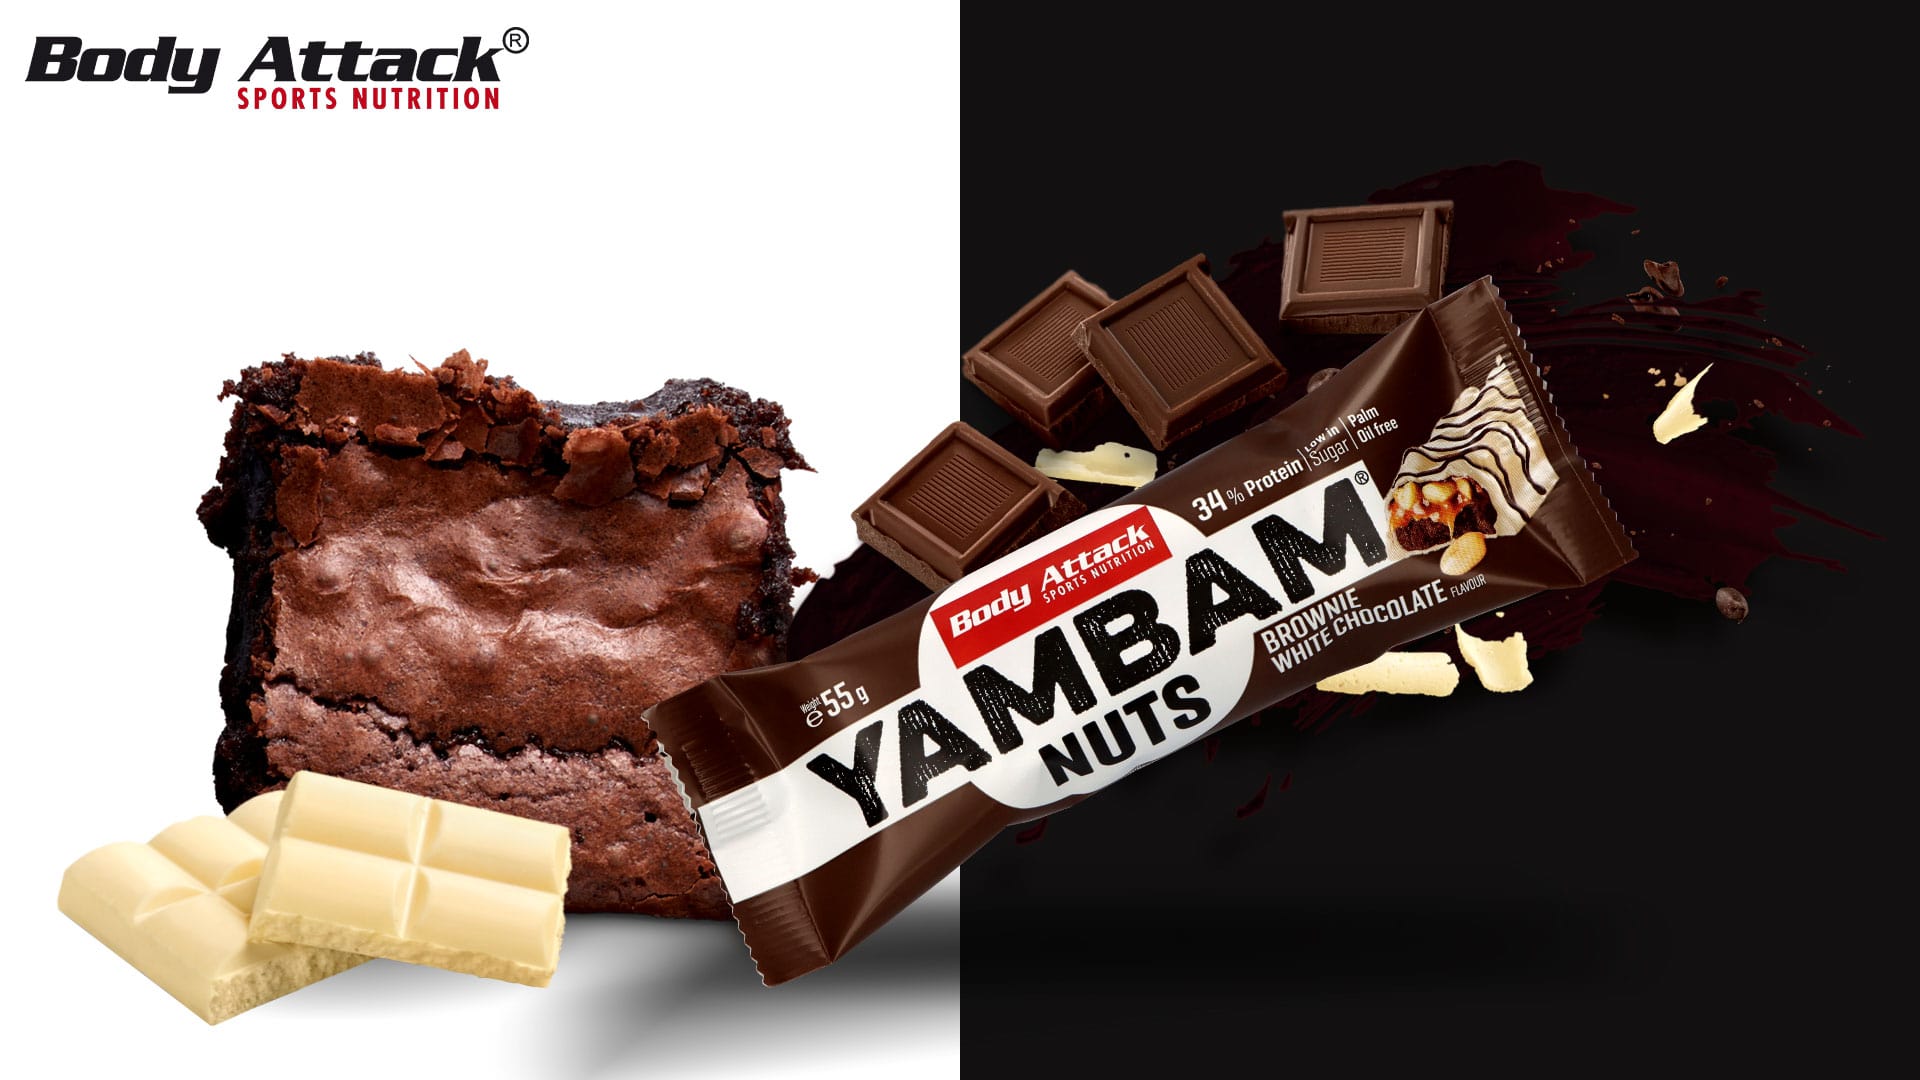 BODY ATTACK Yambam Crunchy - 55g protein bar